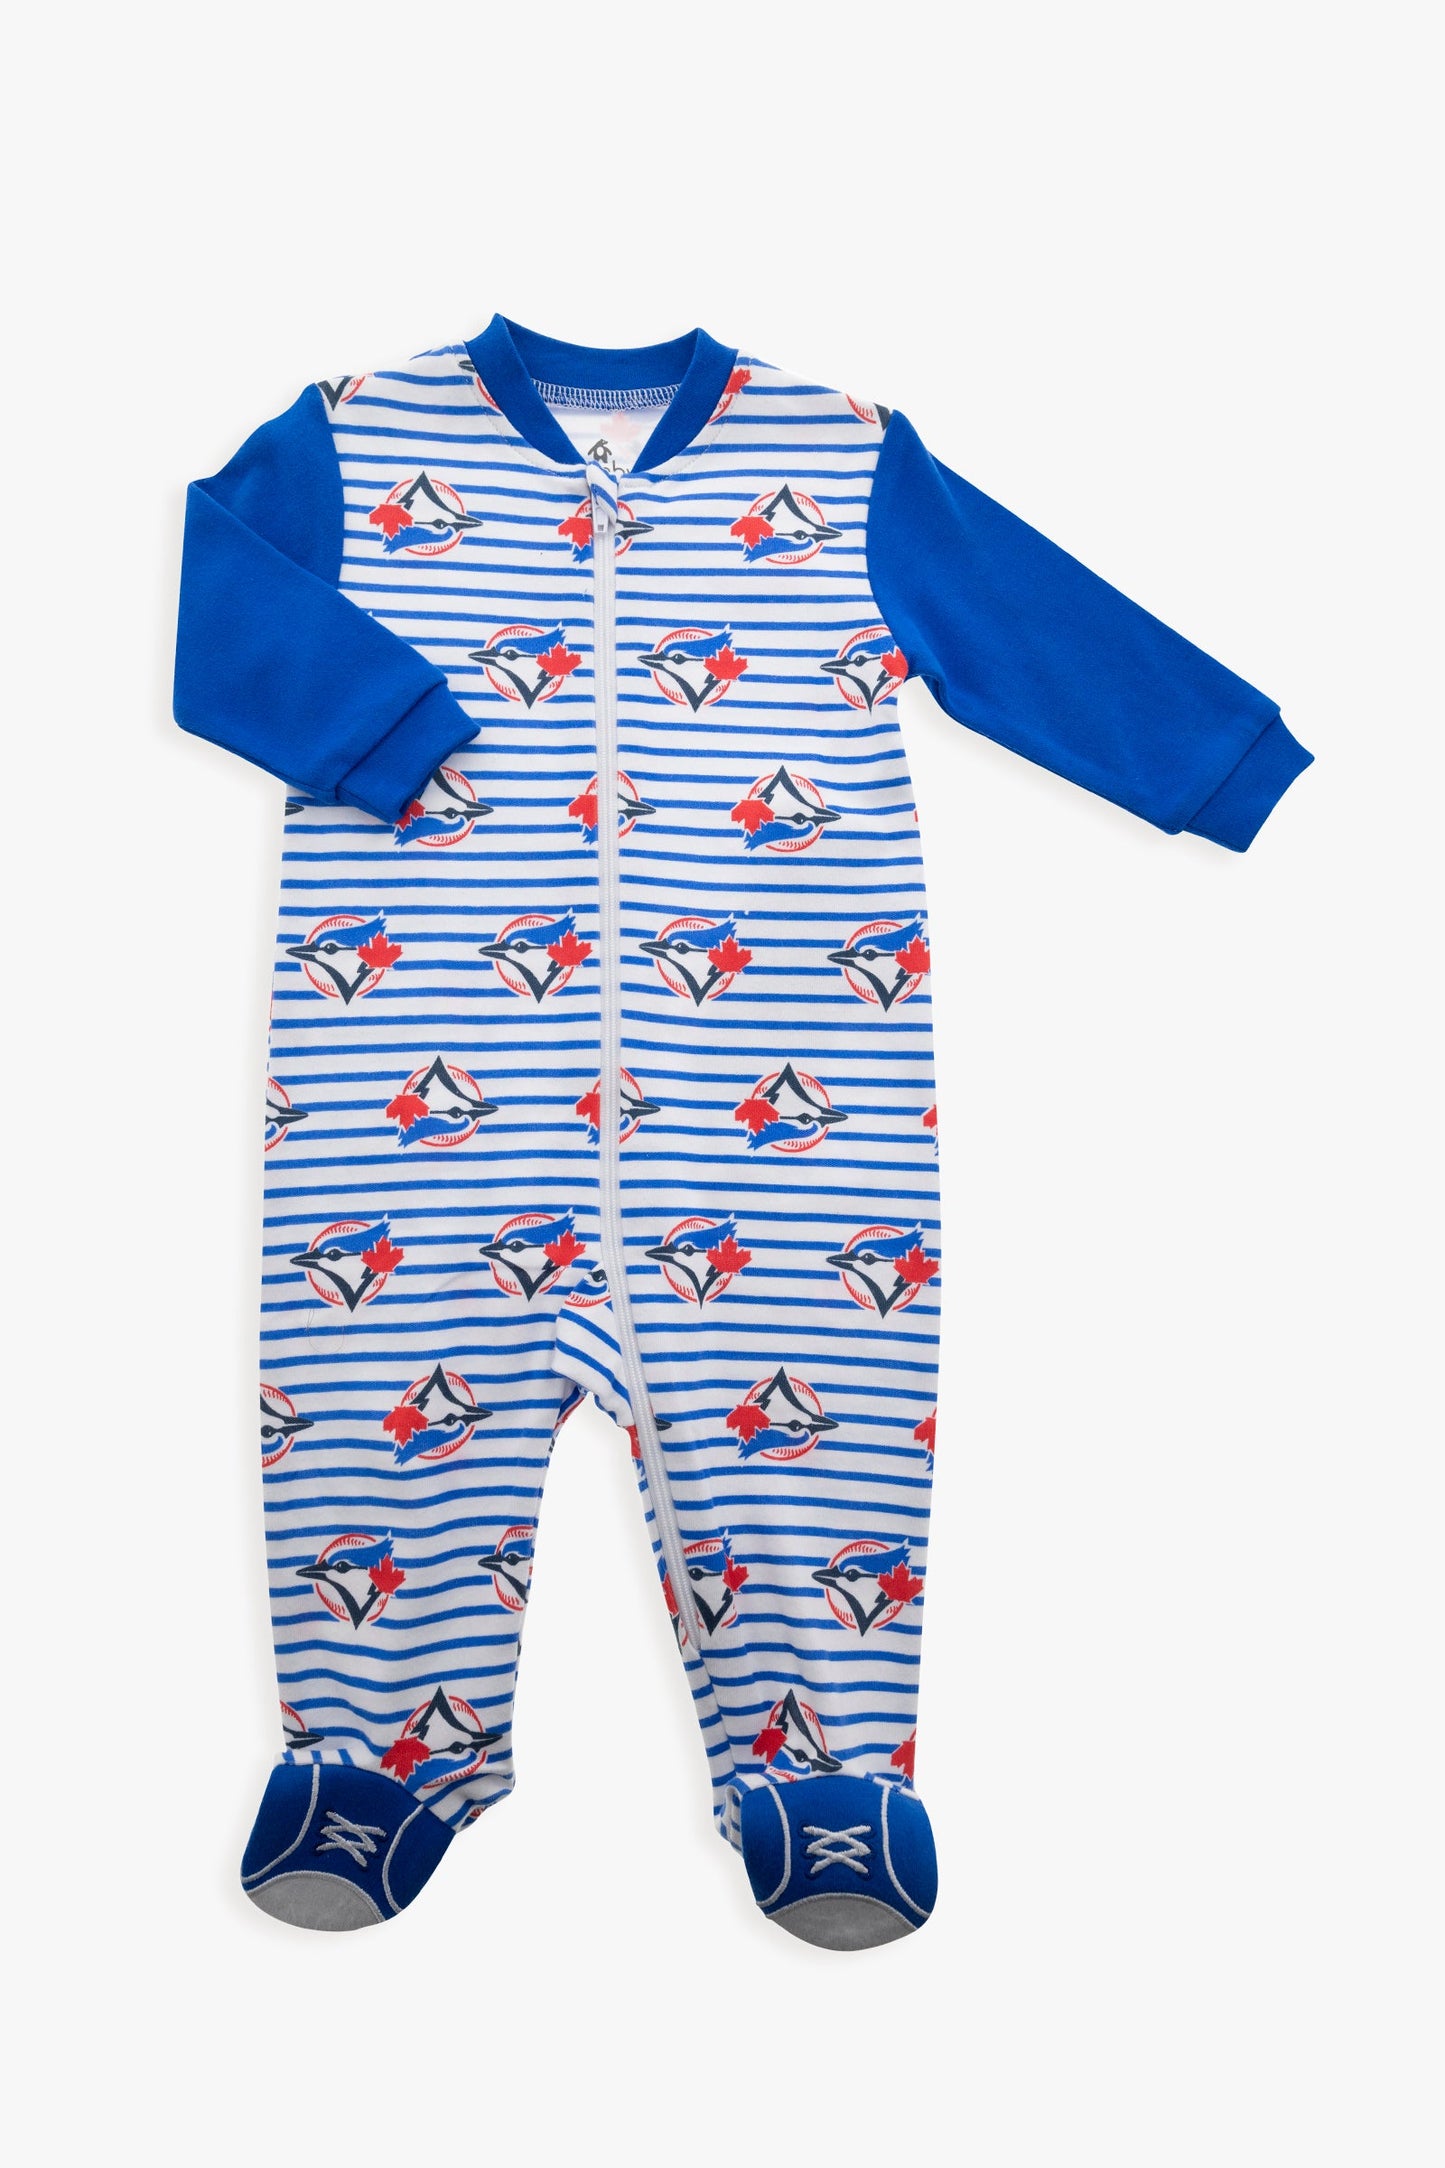 MLB Toronto Blue Jays Logo Pattern Toddler Royal Long Sleeve Sleeper with Zipper Closure